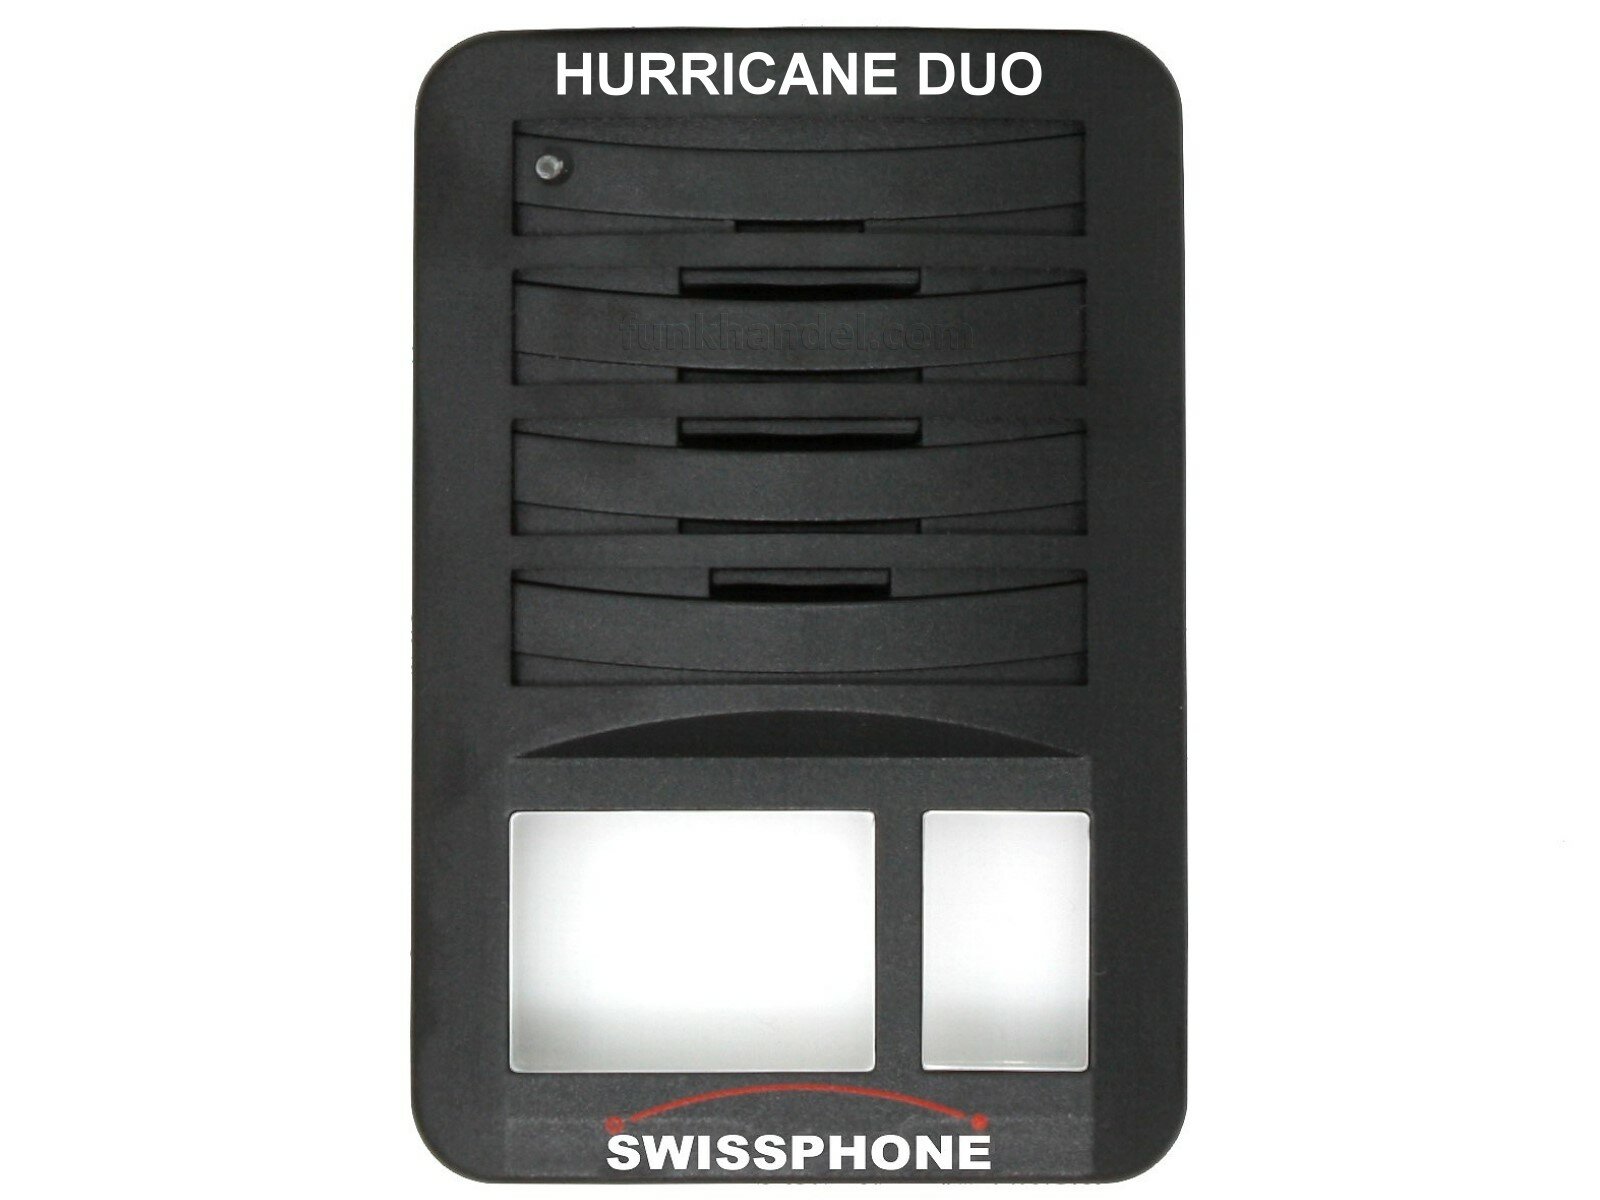 Swissphone Gehuse Oberteil Hurricane DUO